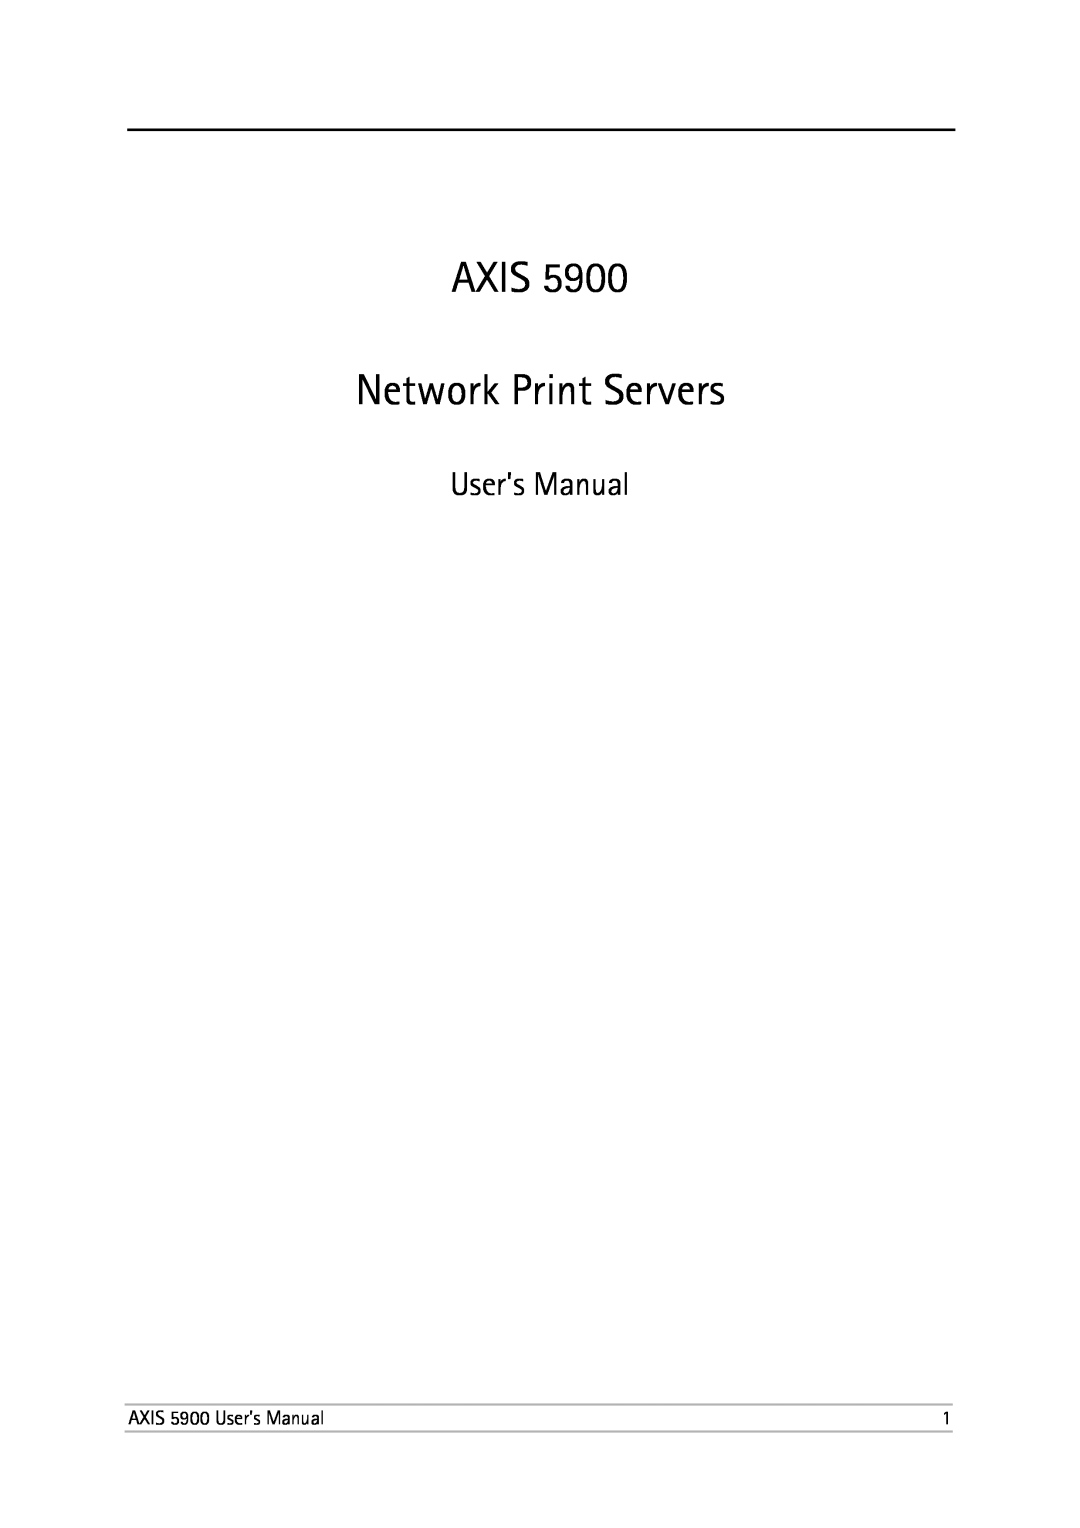 Philips 5900 user manual User’s Manual, AXIS Network Print Servers 